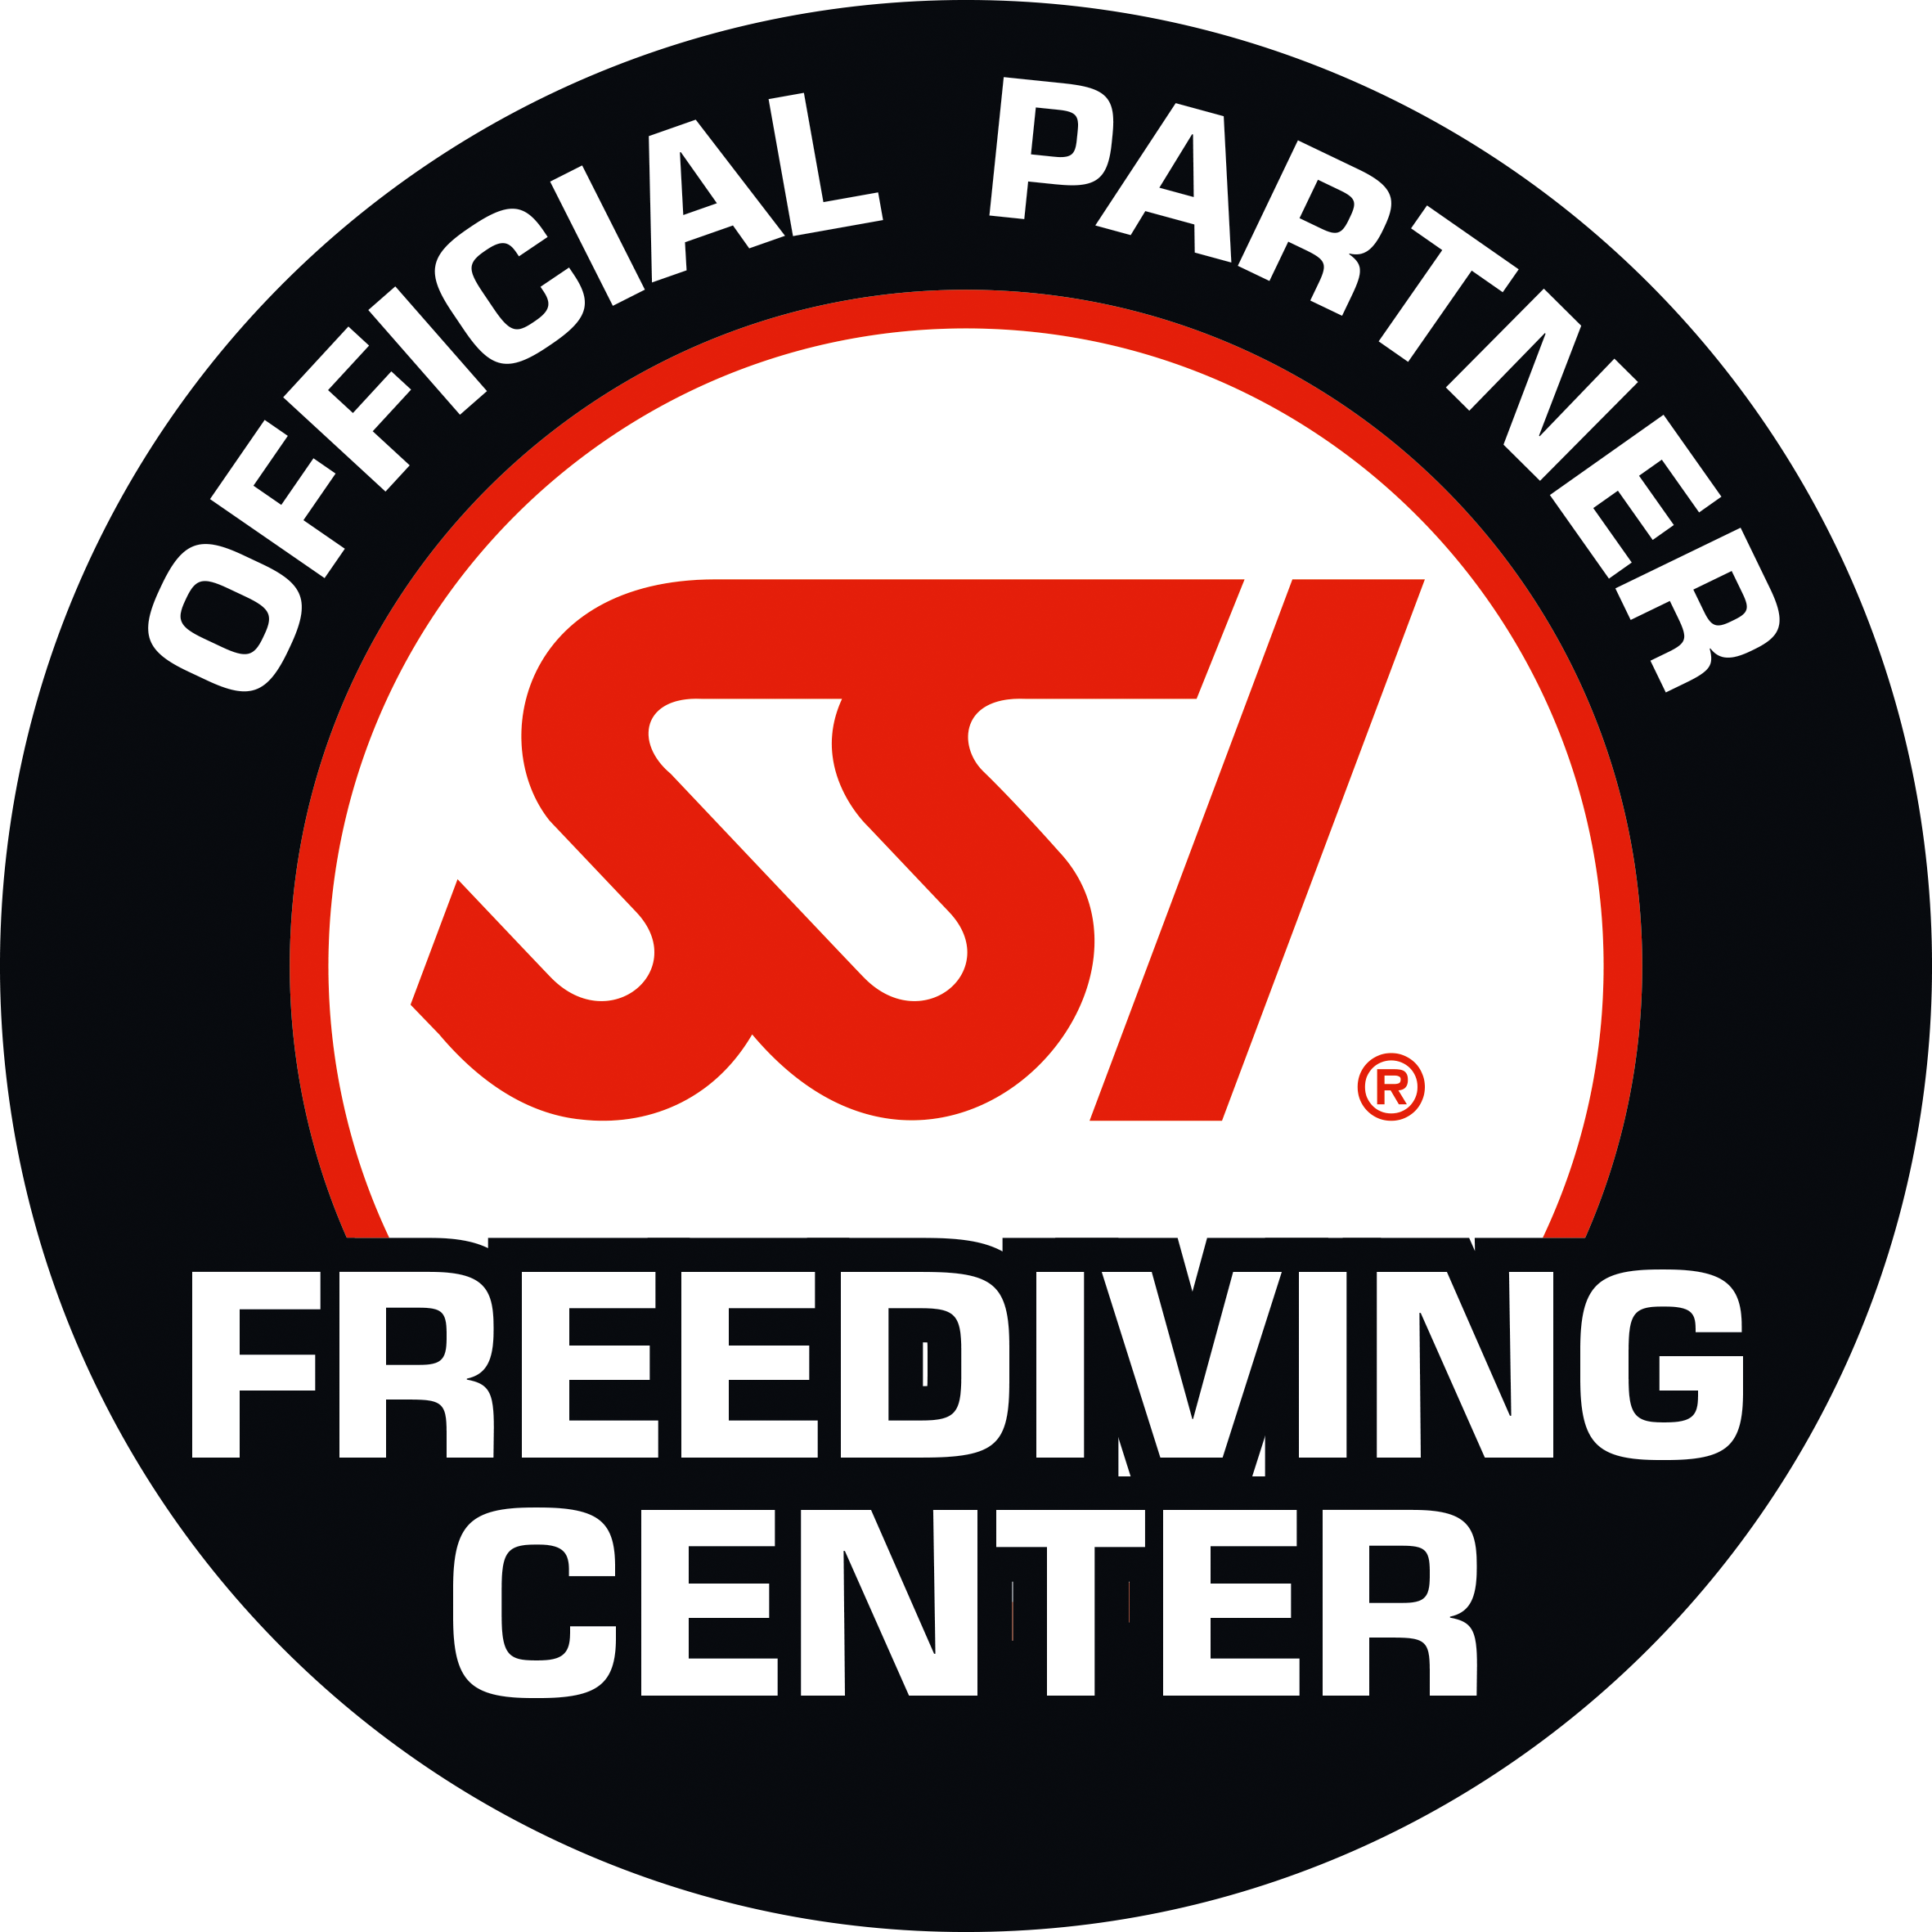 SSI Freediving Center